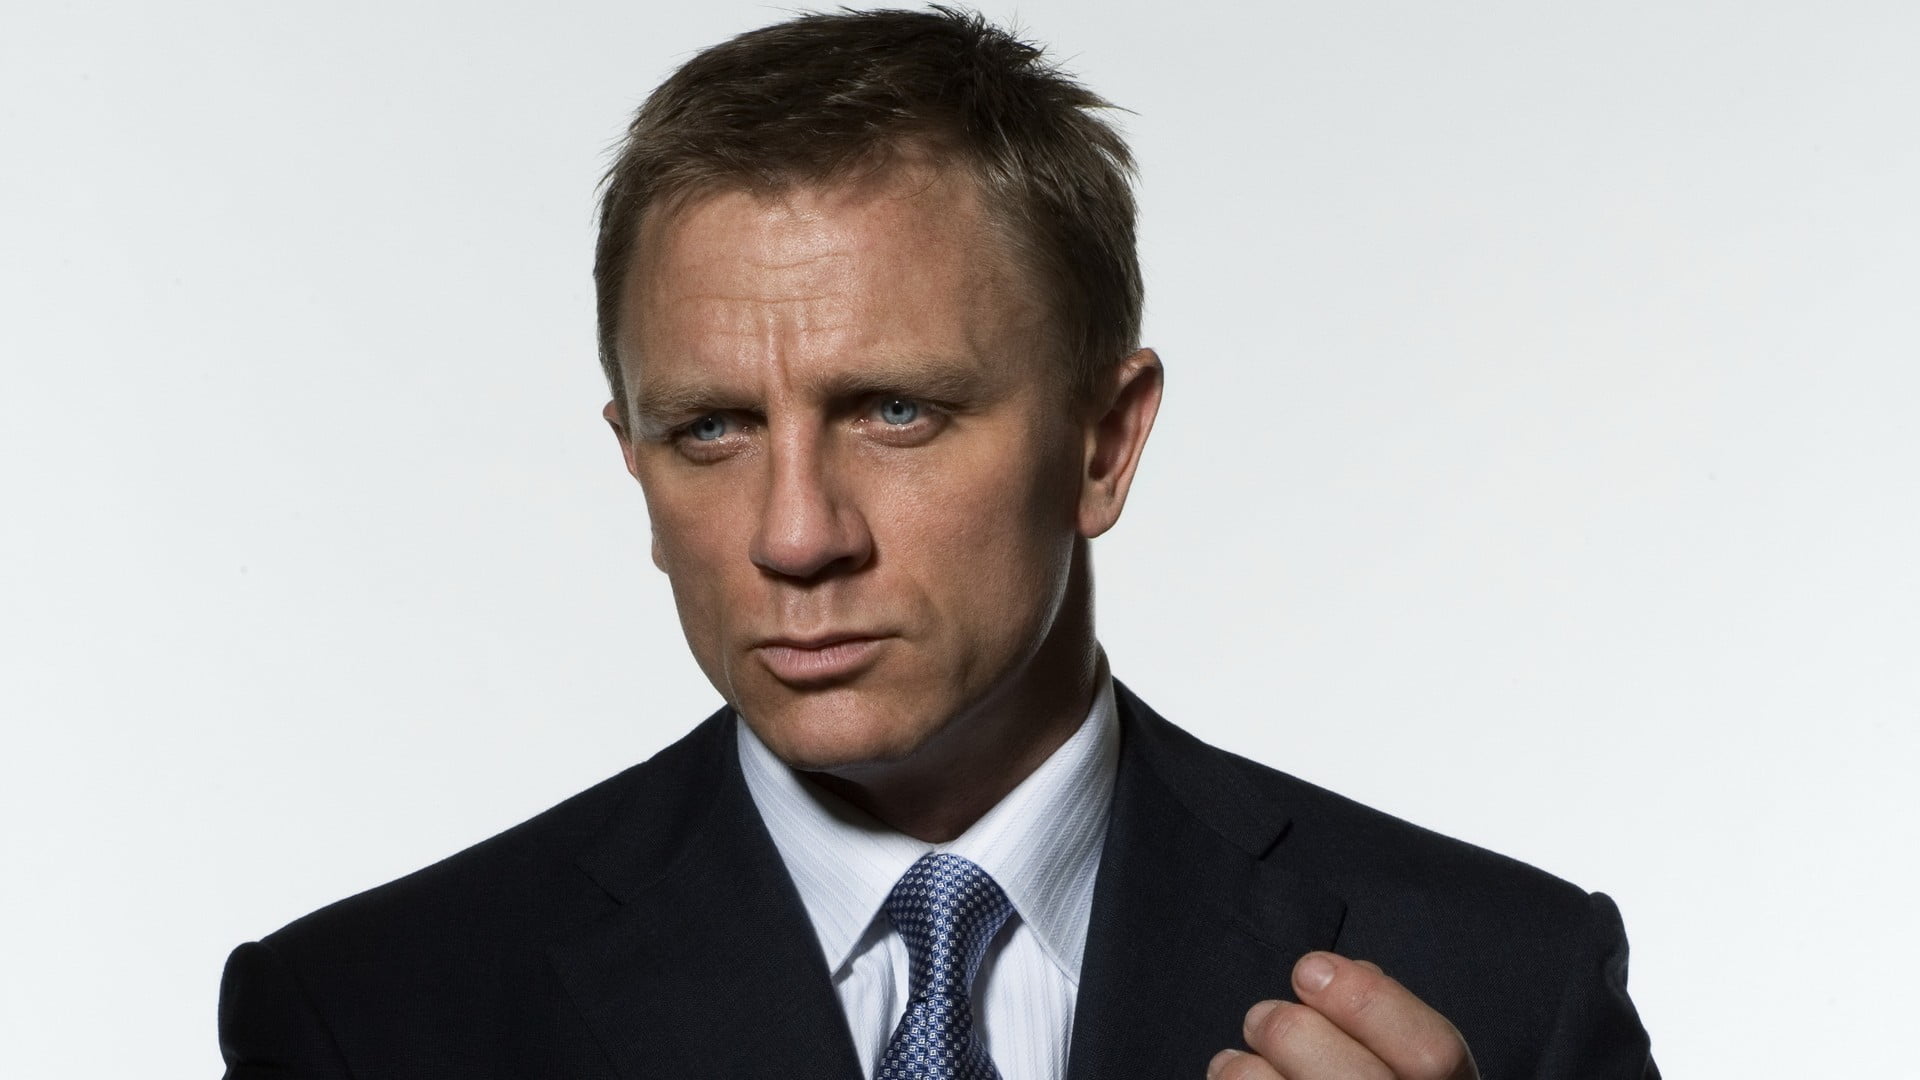 Download free James Bond In Black Suit Wallpaper - MrWallpaper.com